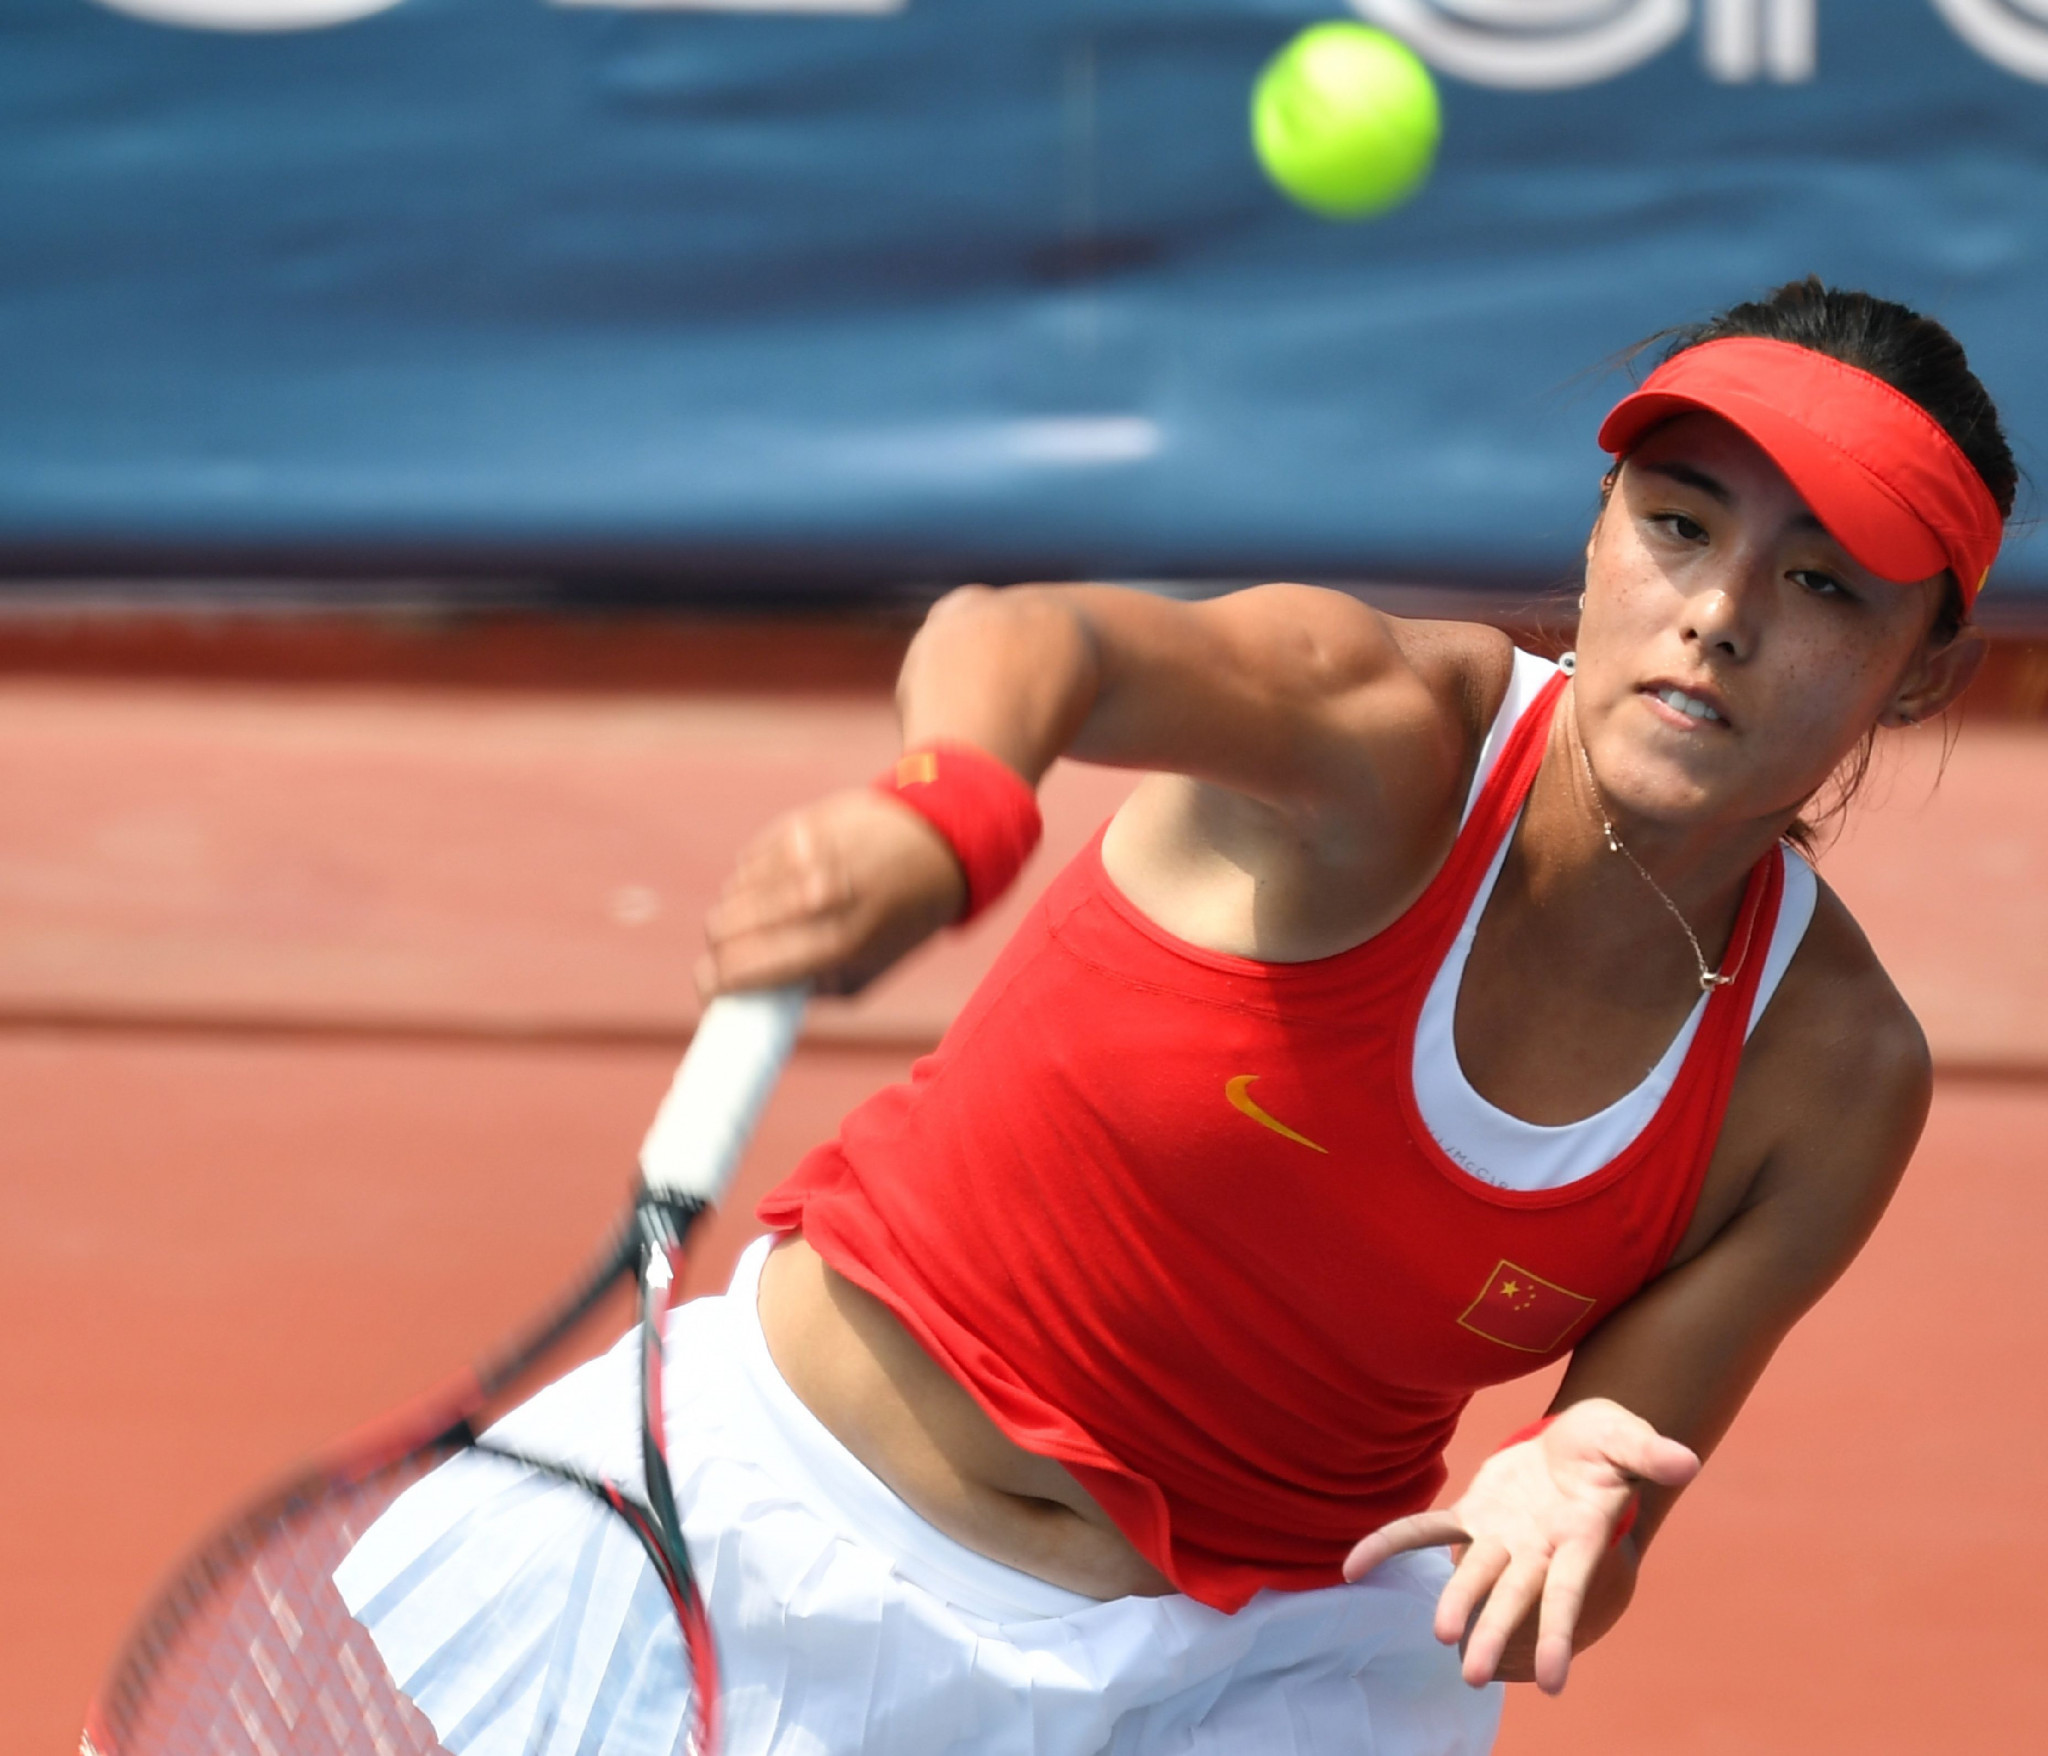 Wang Qiang proved too strong for fellow Chinese Zhang Shuai in the women's singles tennis final ©Getty Images